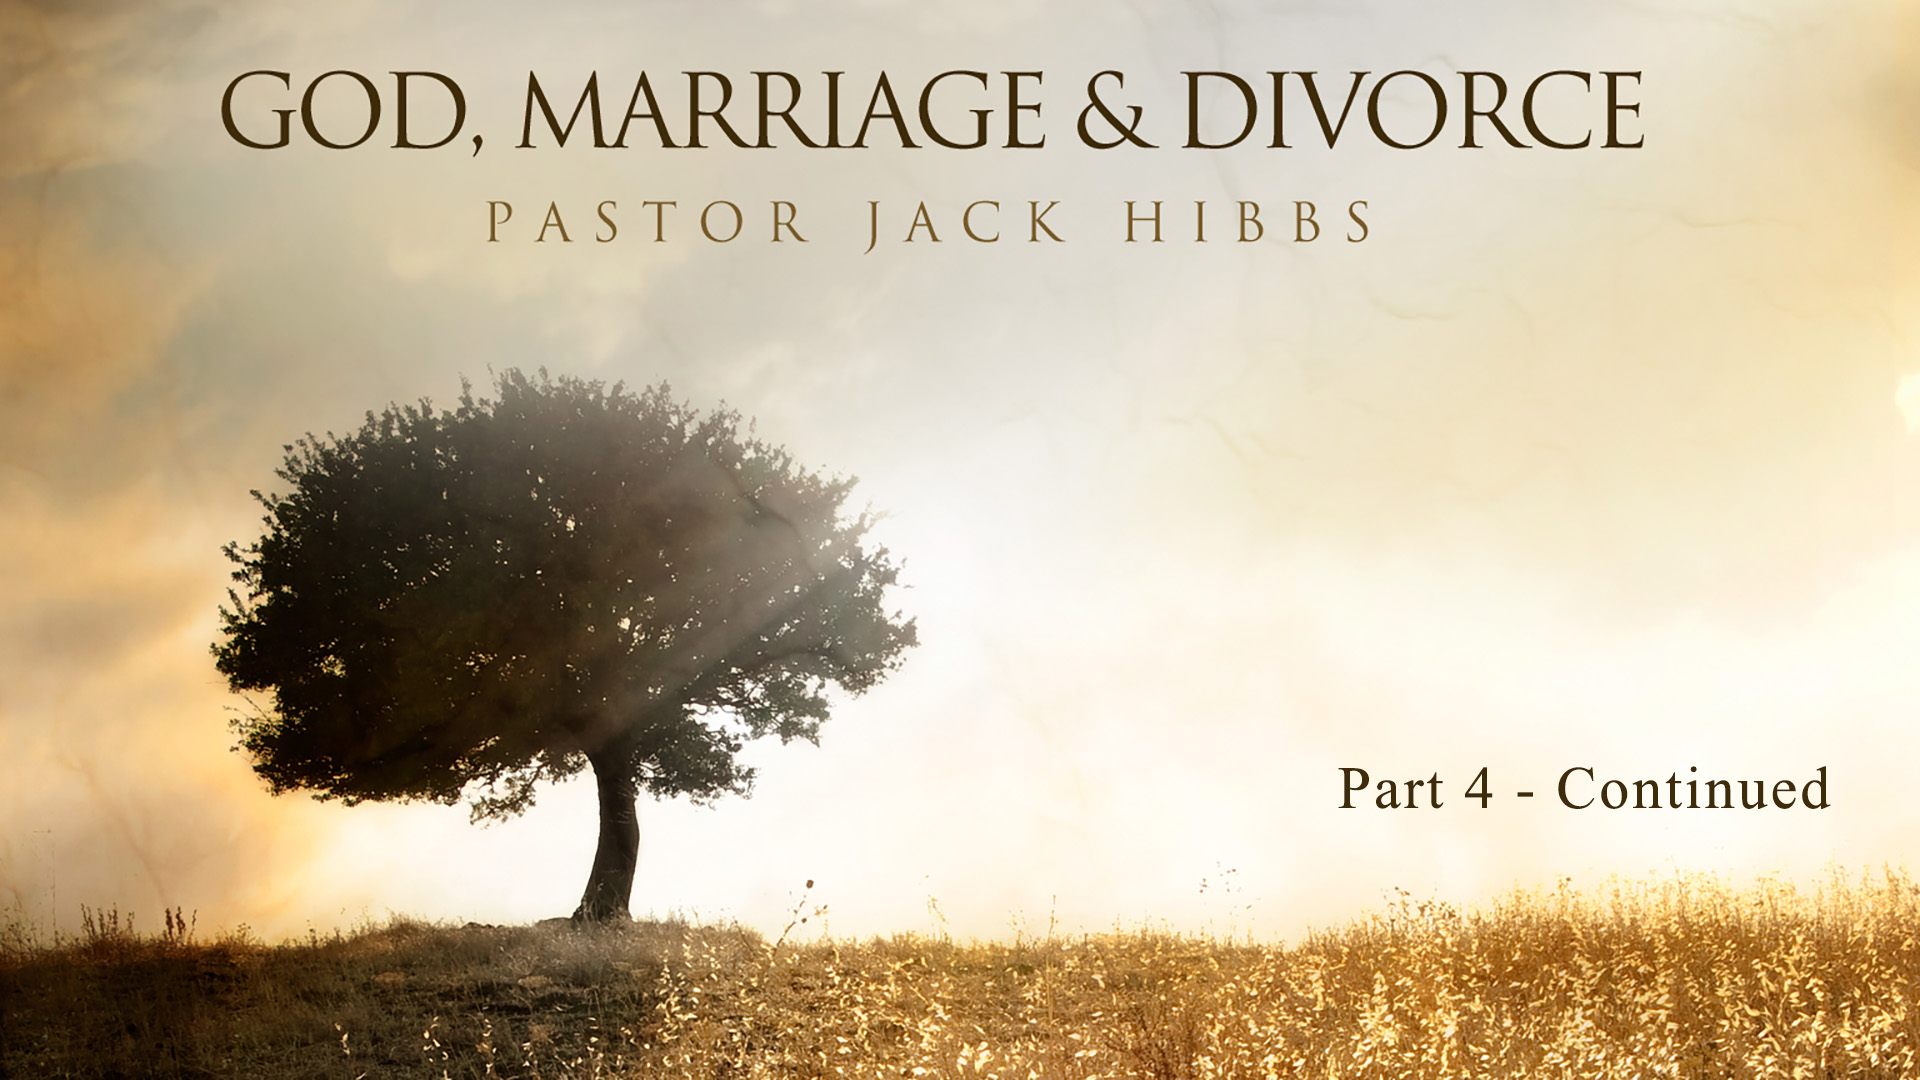 God, Marriage & Divorce – Part 4 Continued